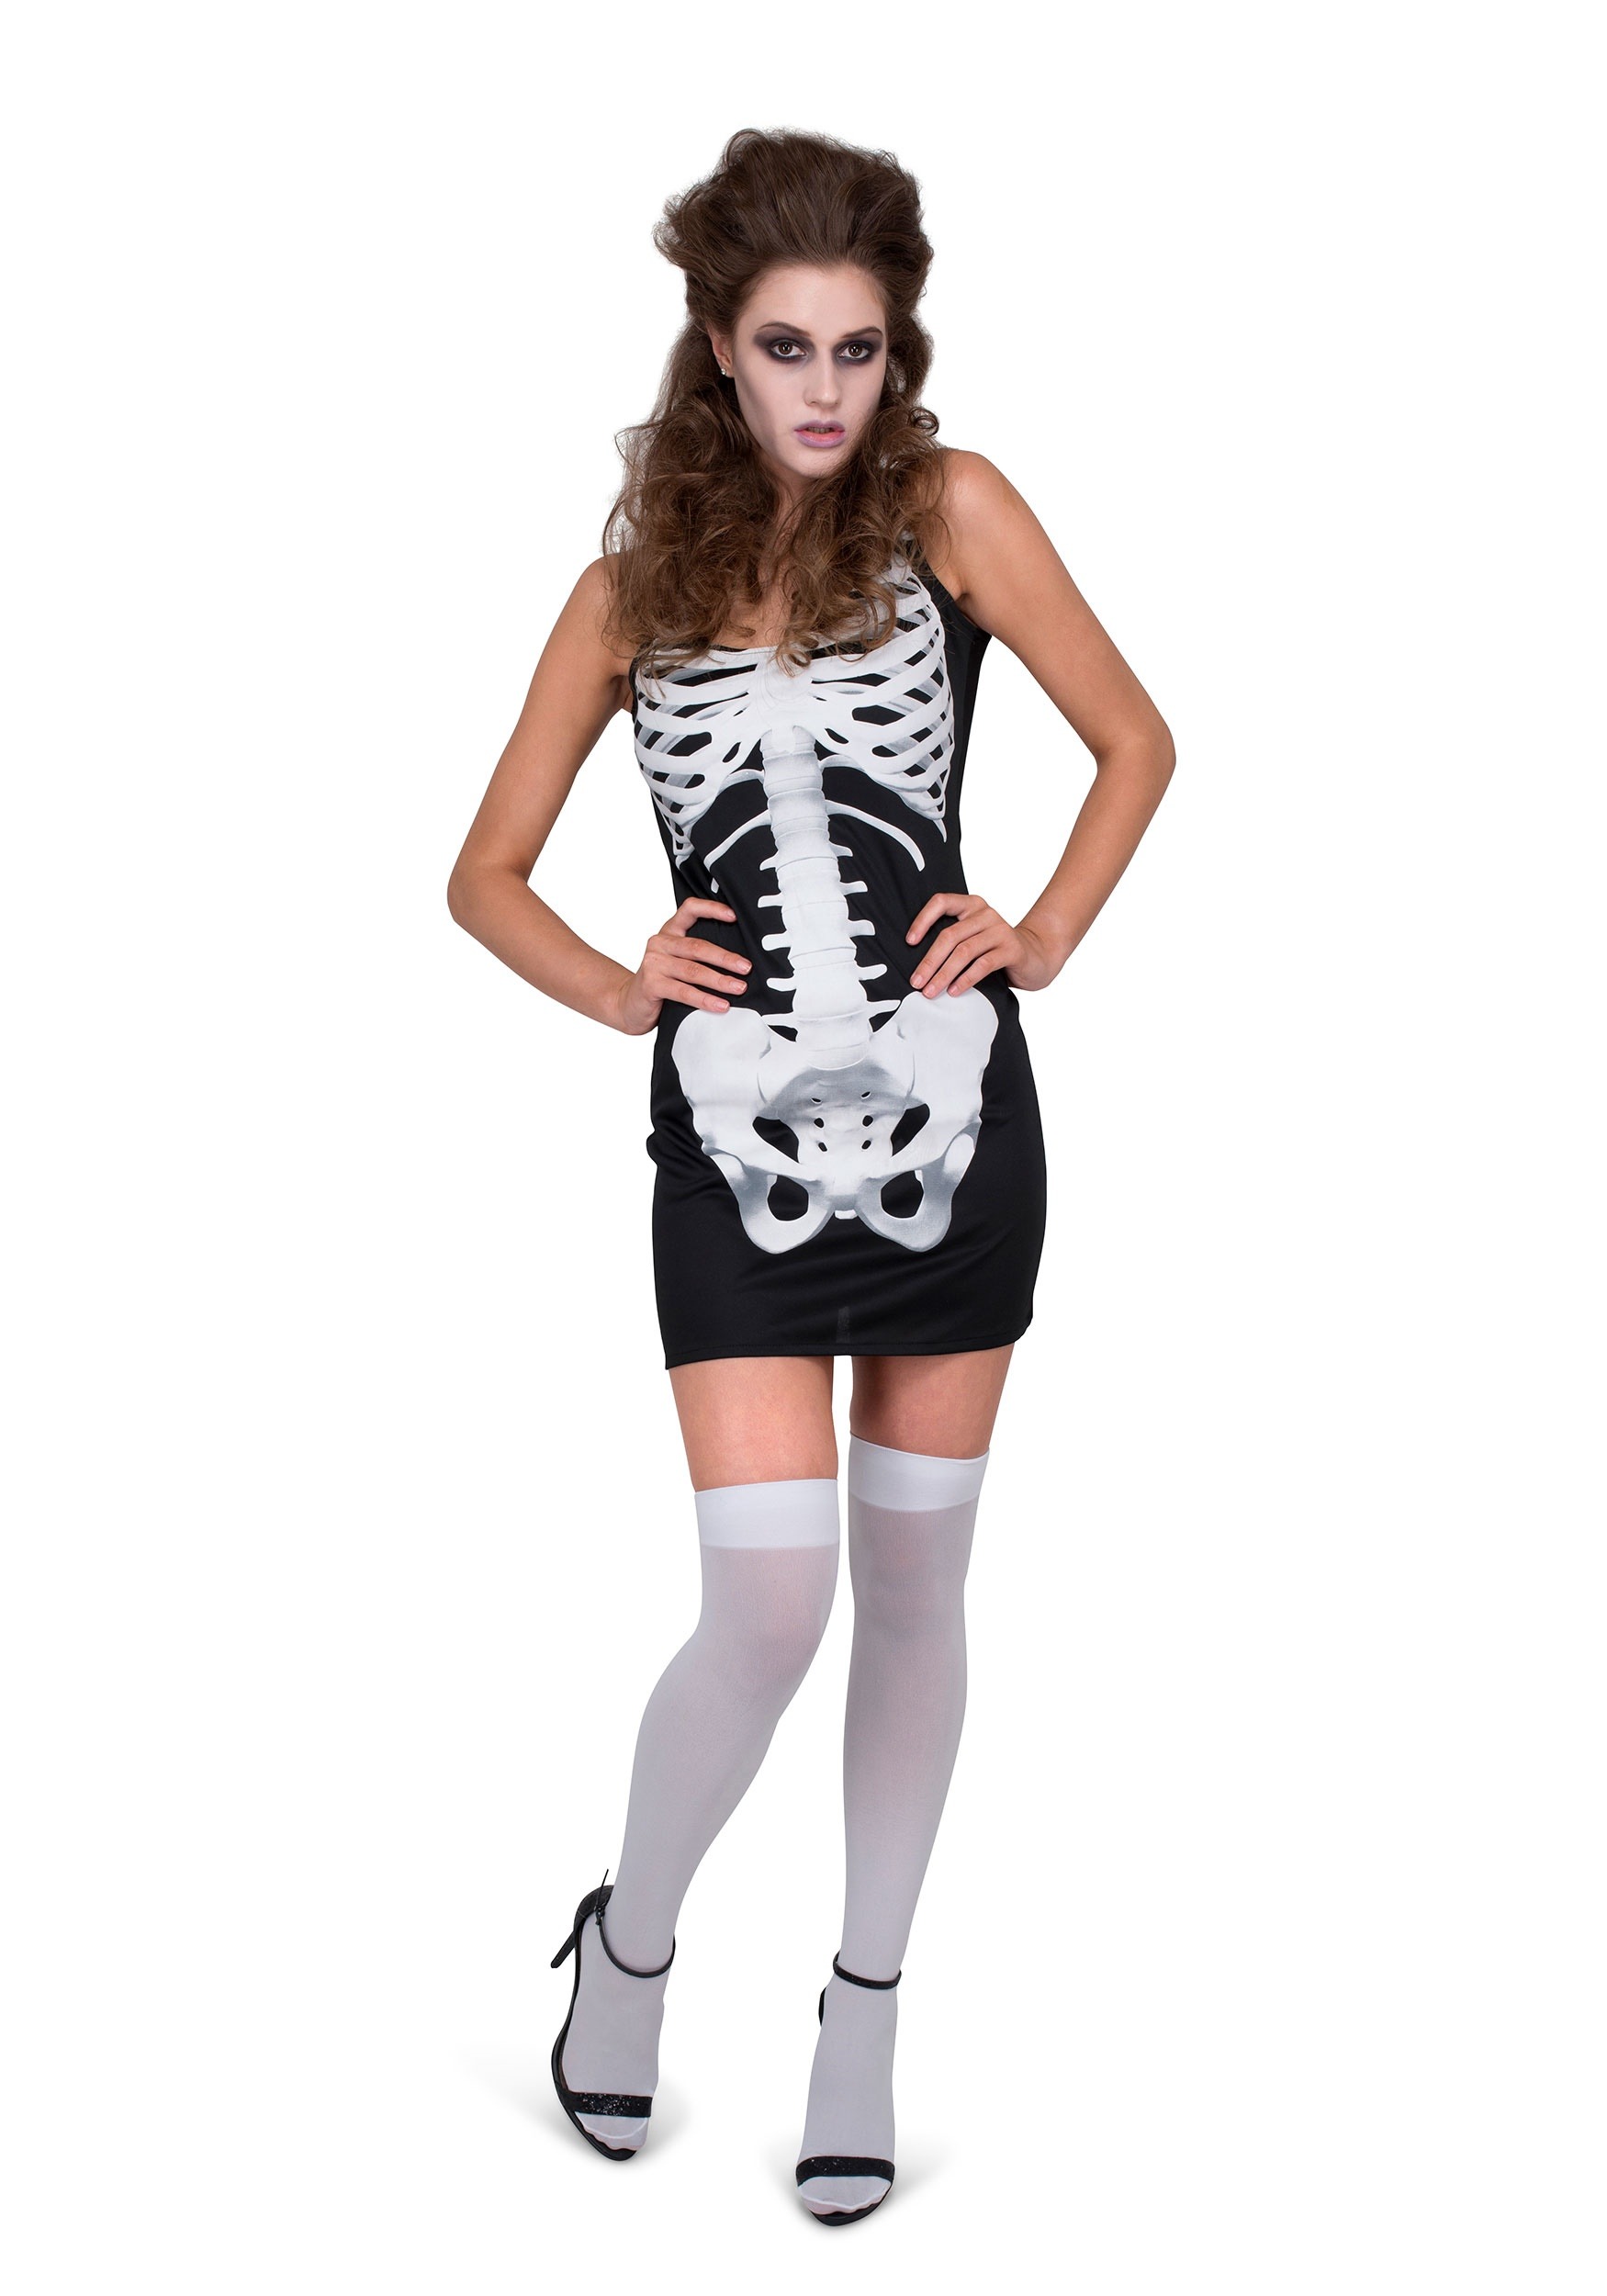 Photos - Fancy Dress Winsun Dress Karnival Costumes Women's Skeleton Dress Black/White KC84084 